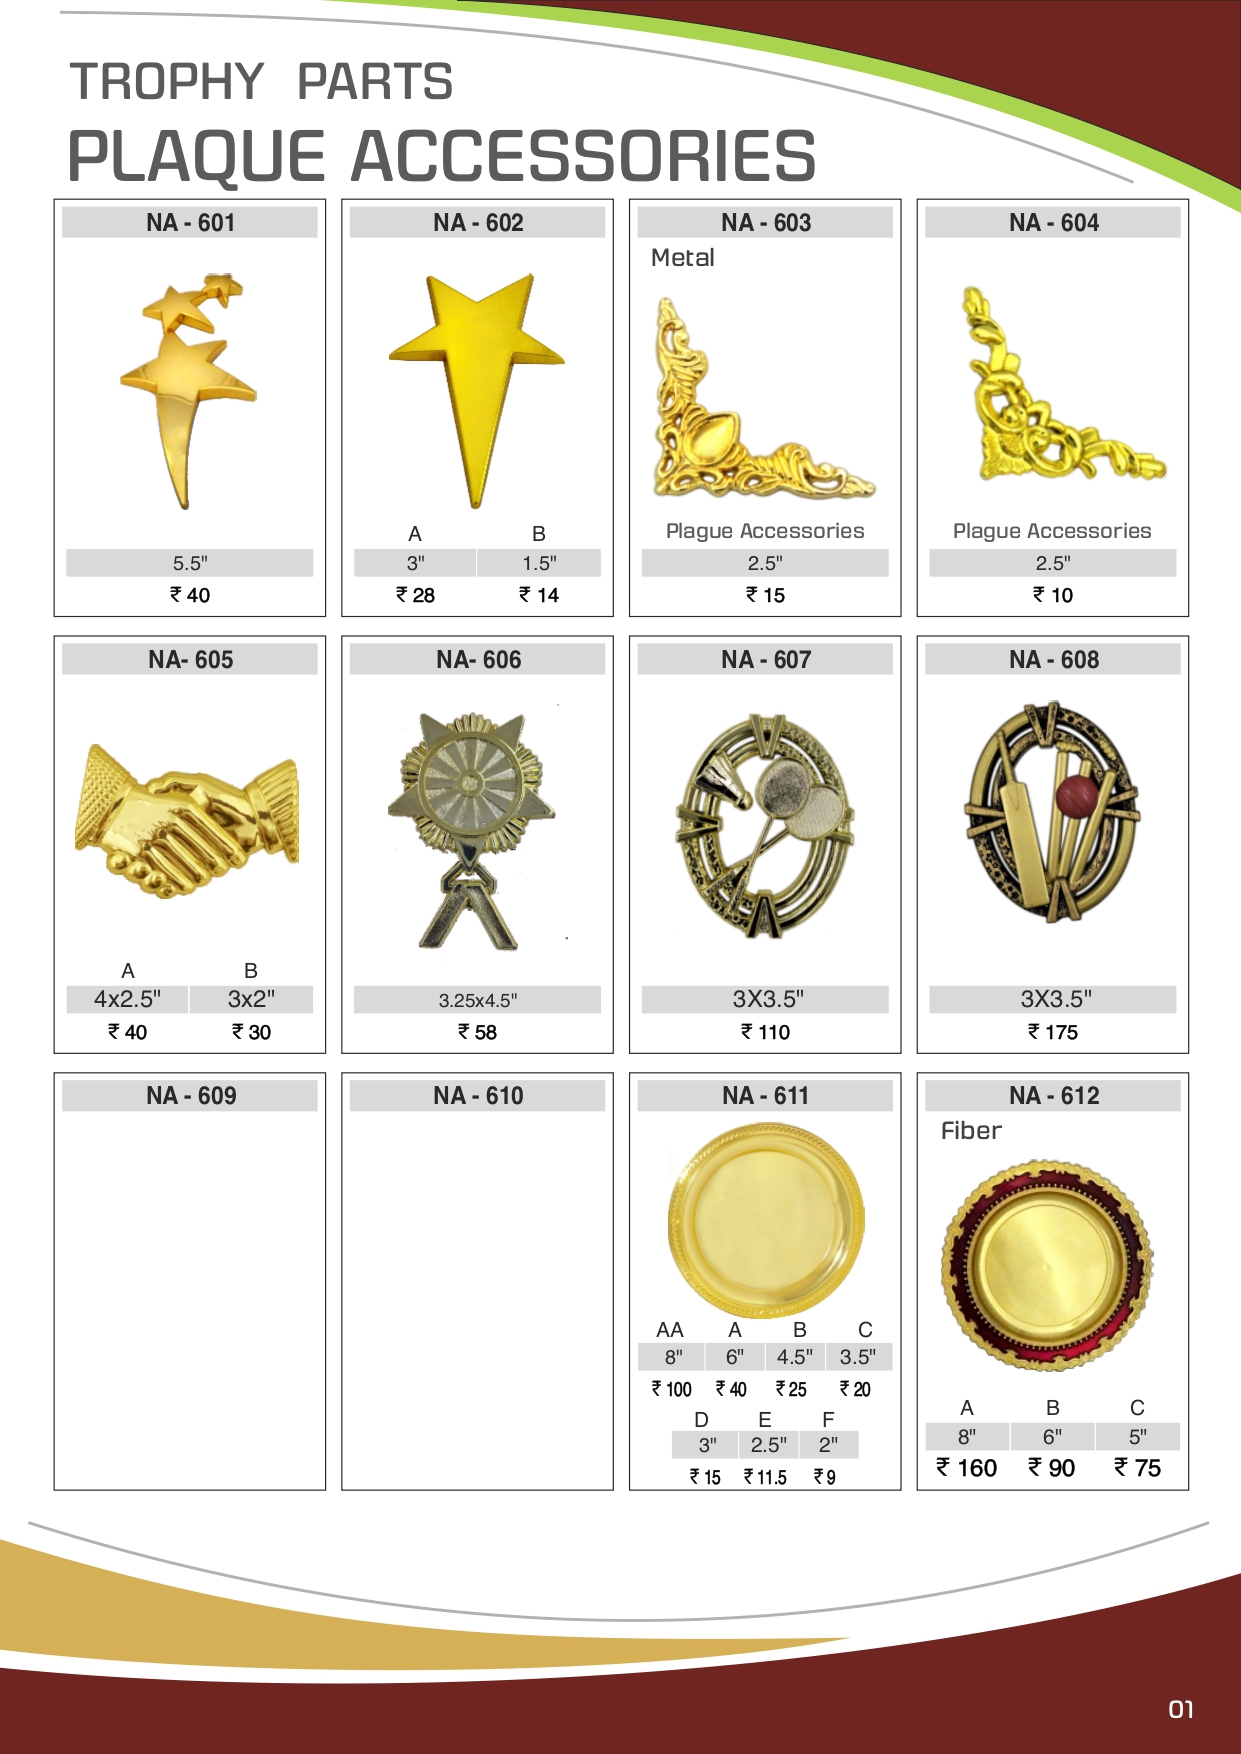 Saga Sports And Trophies - Service - Trophy Parts Plaque Accessories